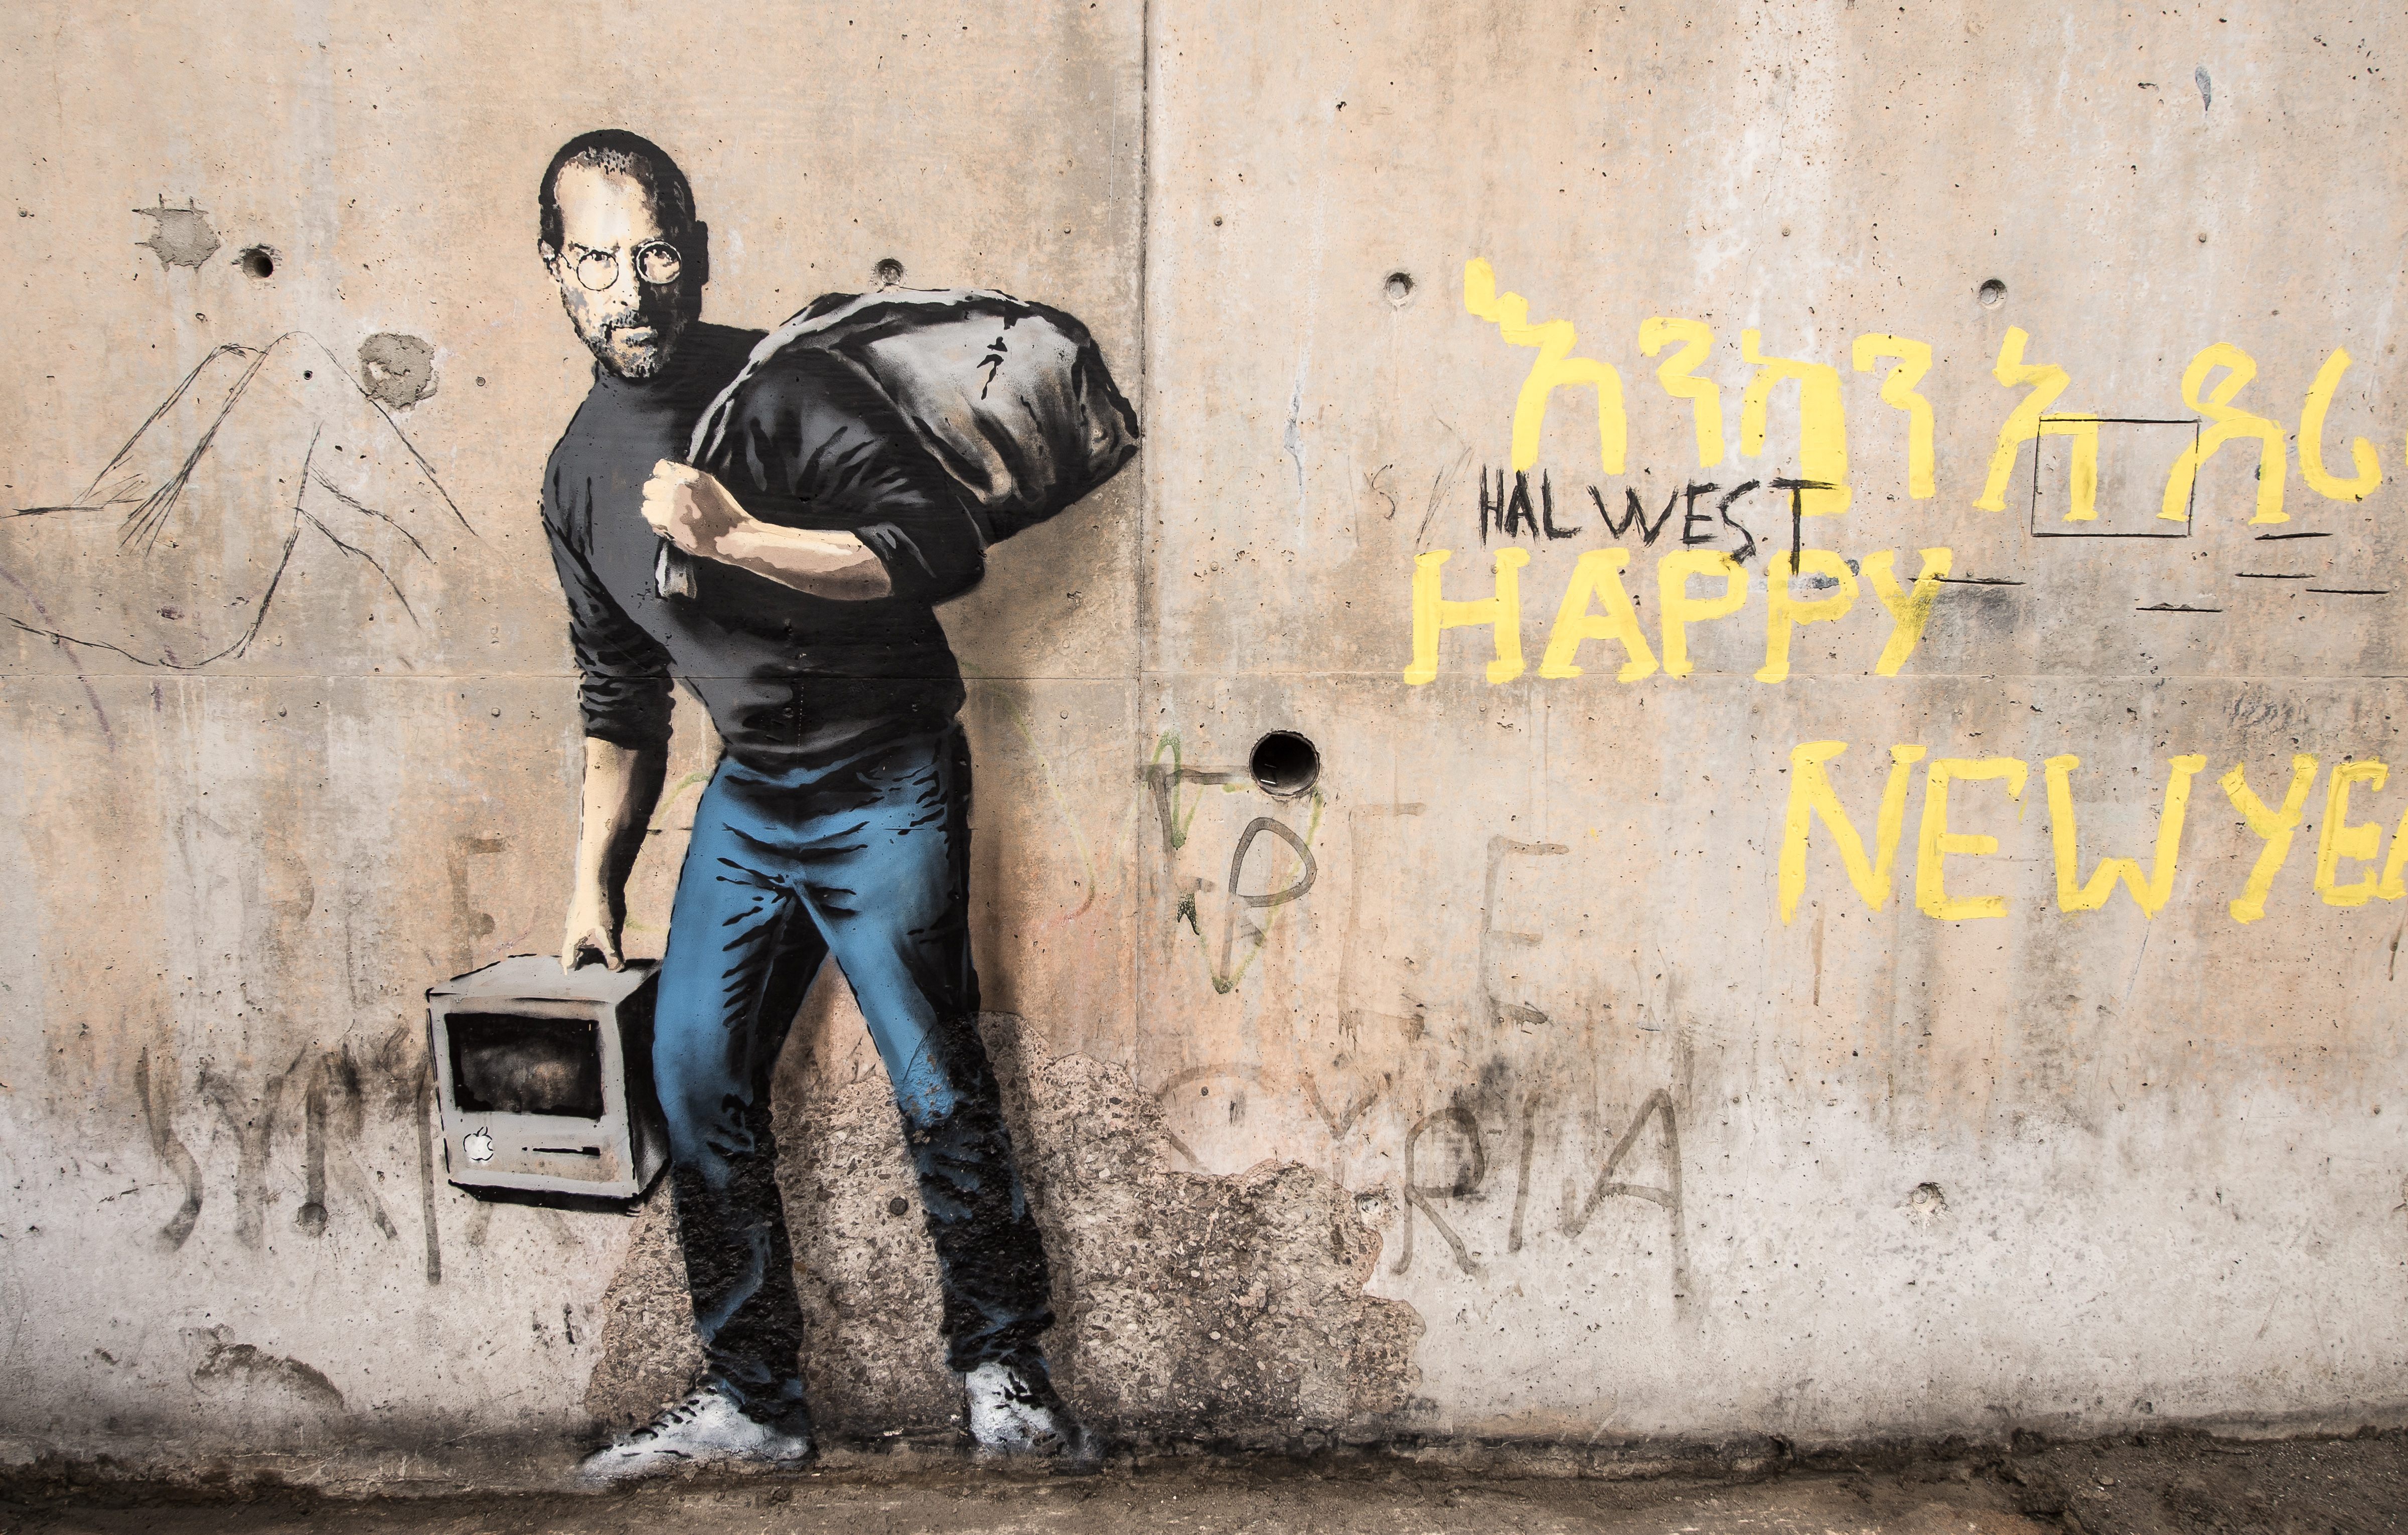 General 4800x3060 Banksy graffiti concrete Steve Jobs urban wall street art